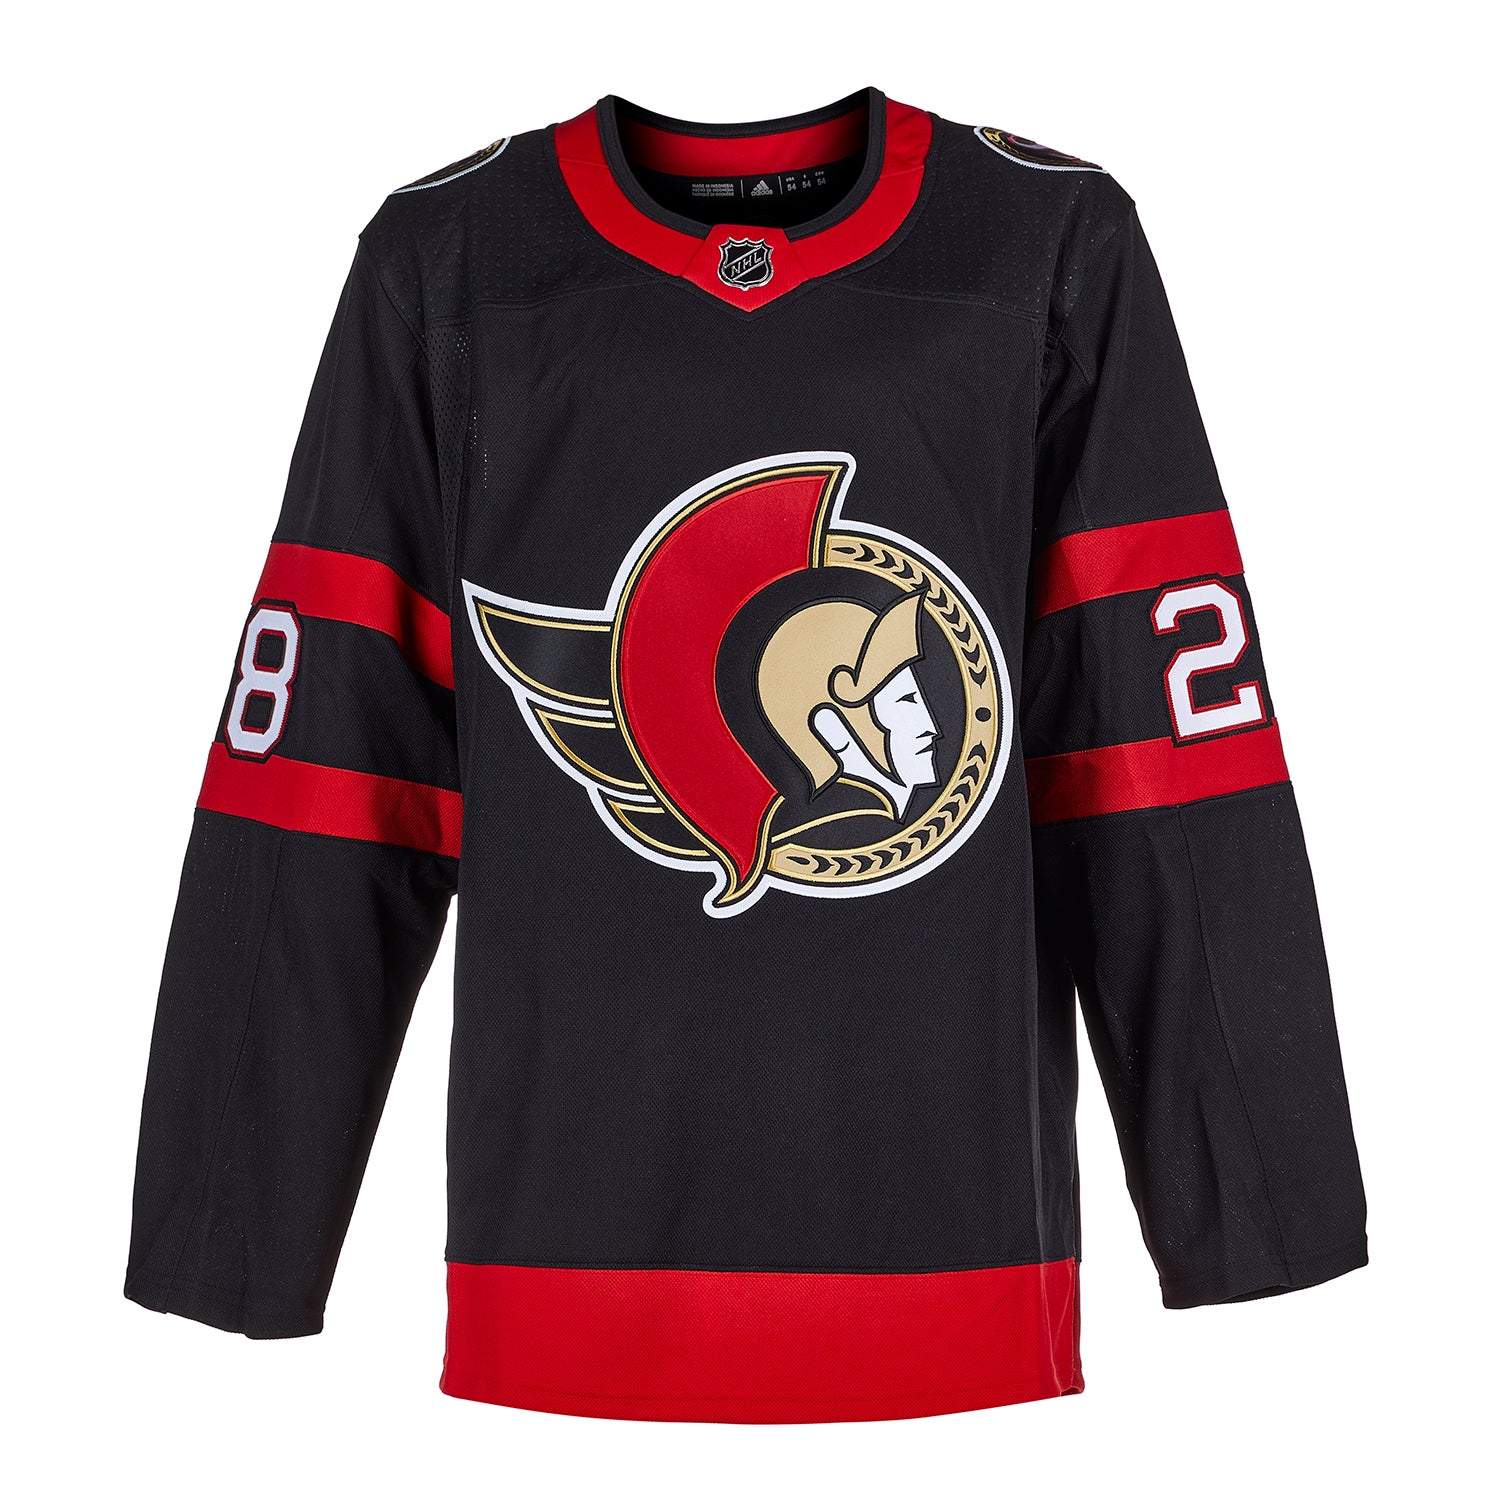 Claude Giroux Ottawa Senators Autographed Home Adidas Jersey